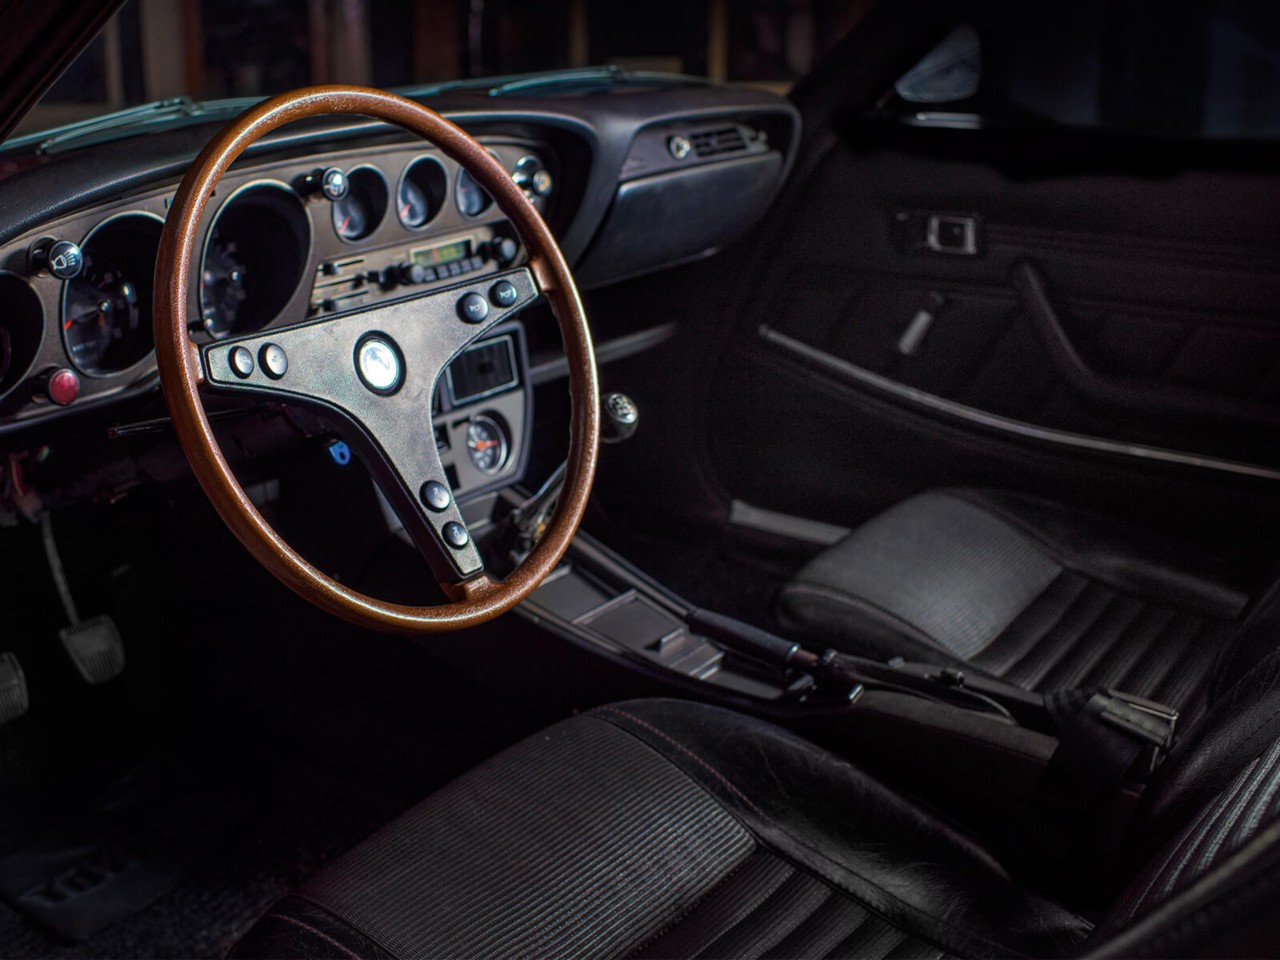 Toyota Celica steering wheel close up